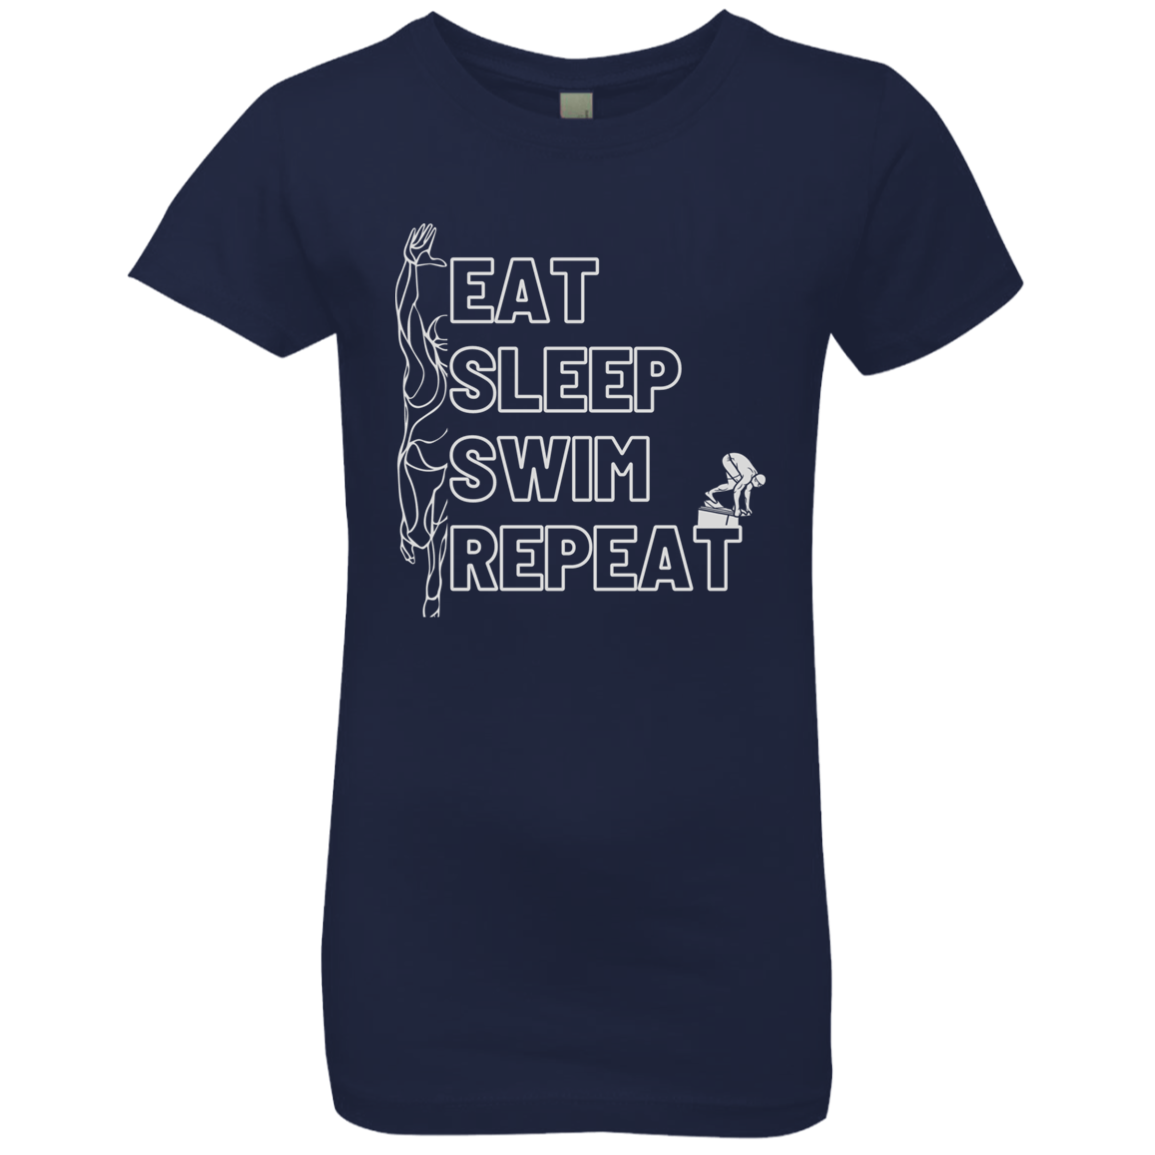 Eat, Sleep, Swim, Repeat- Girls' Princess T-Shirt